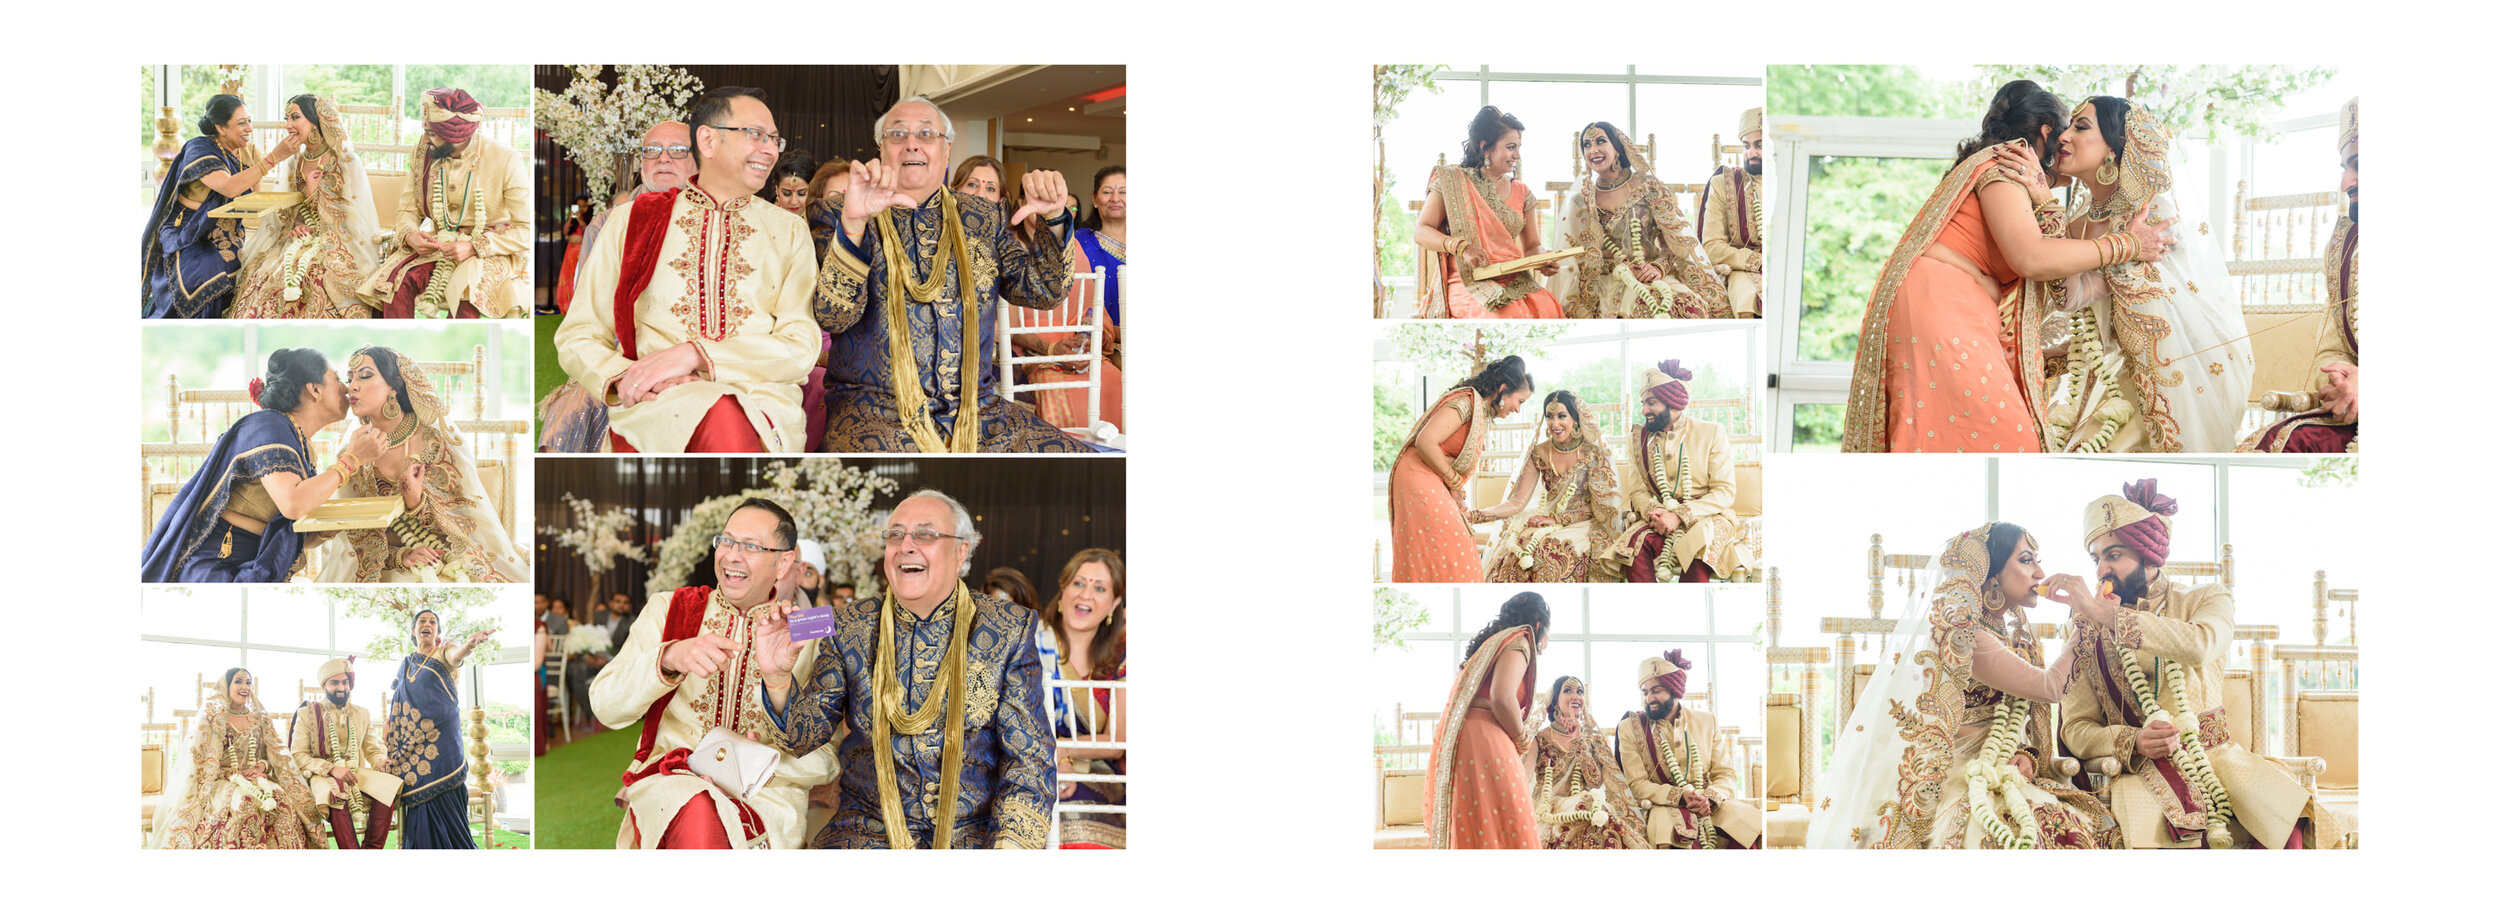 satnam photography luxury hindu wedding album -33.jpg